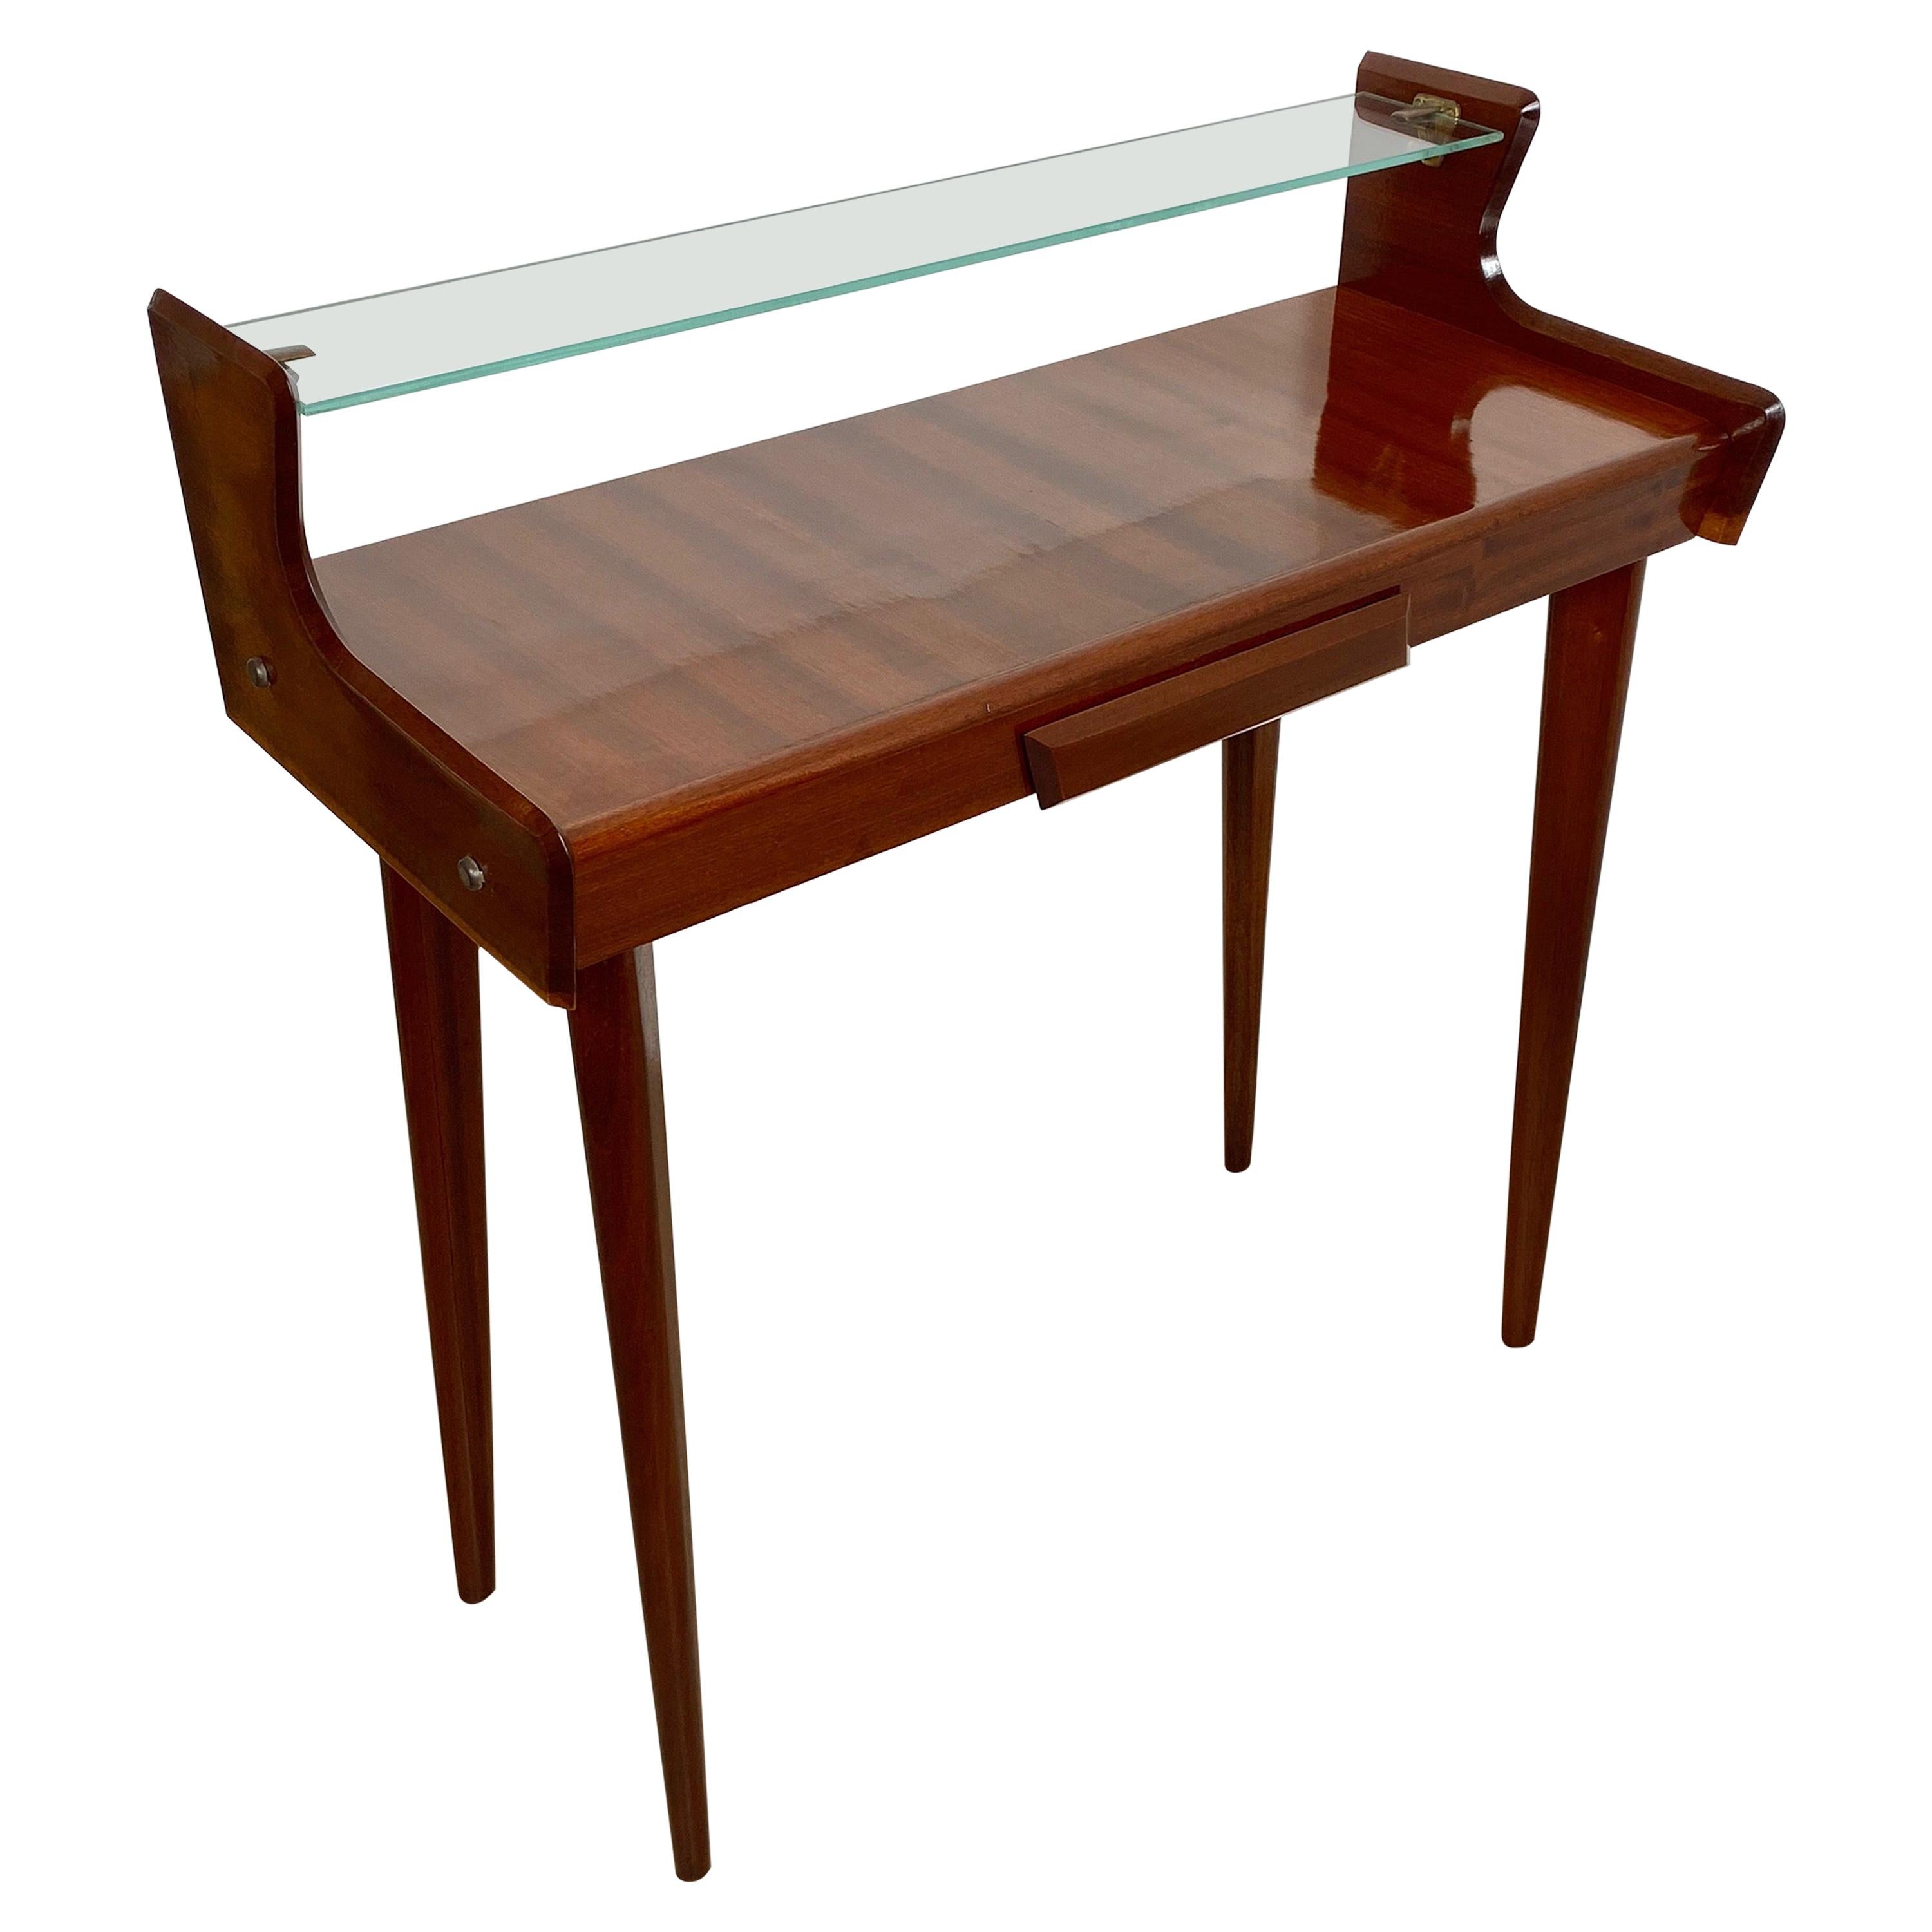 Italian Midcentury Mahogany Wood and Glass Console Table by Carlo de Carli 1950s